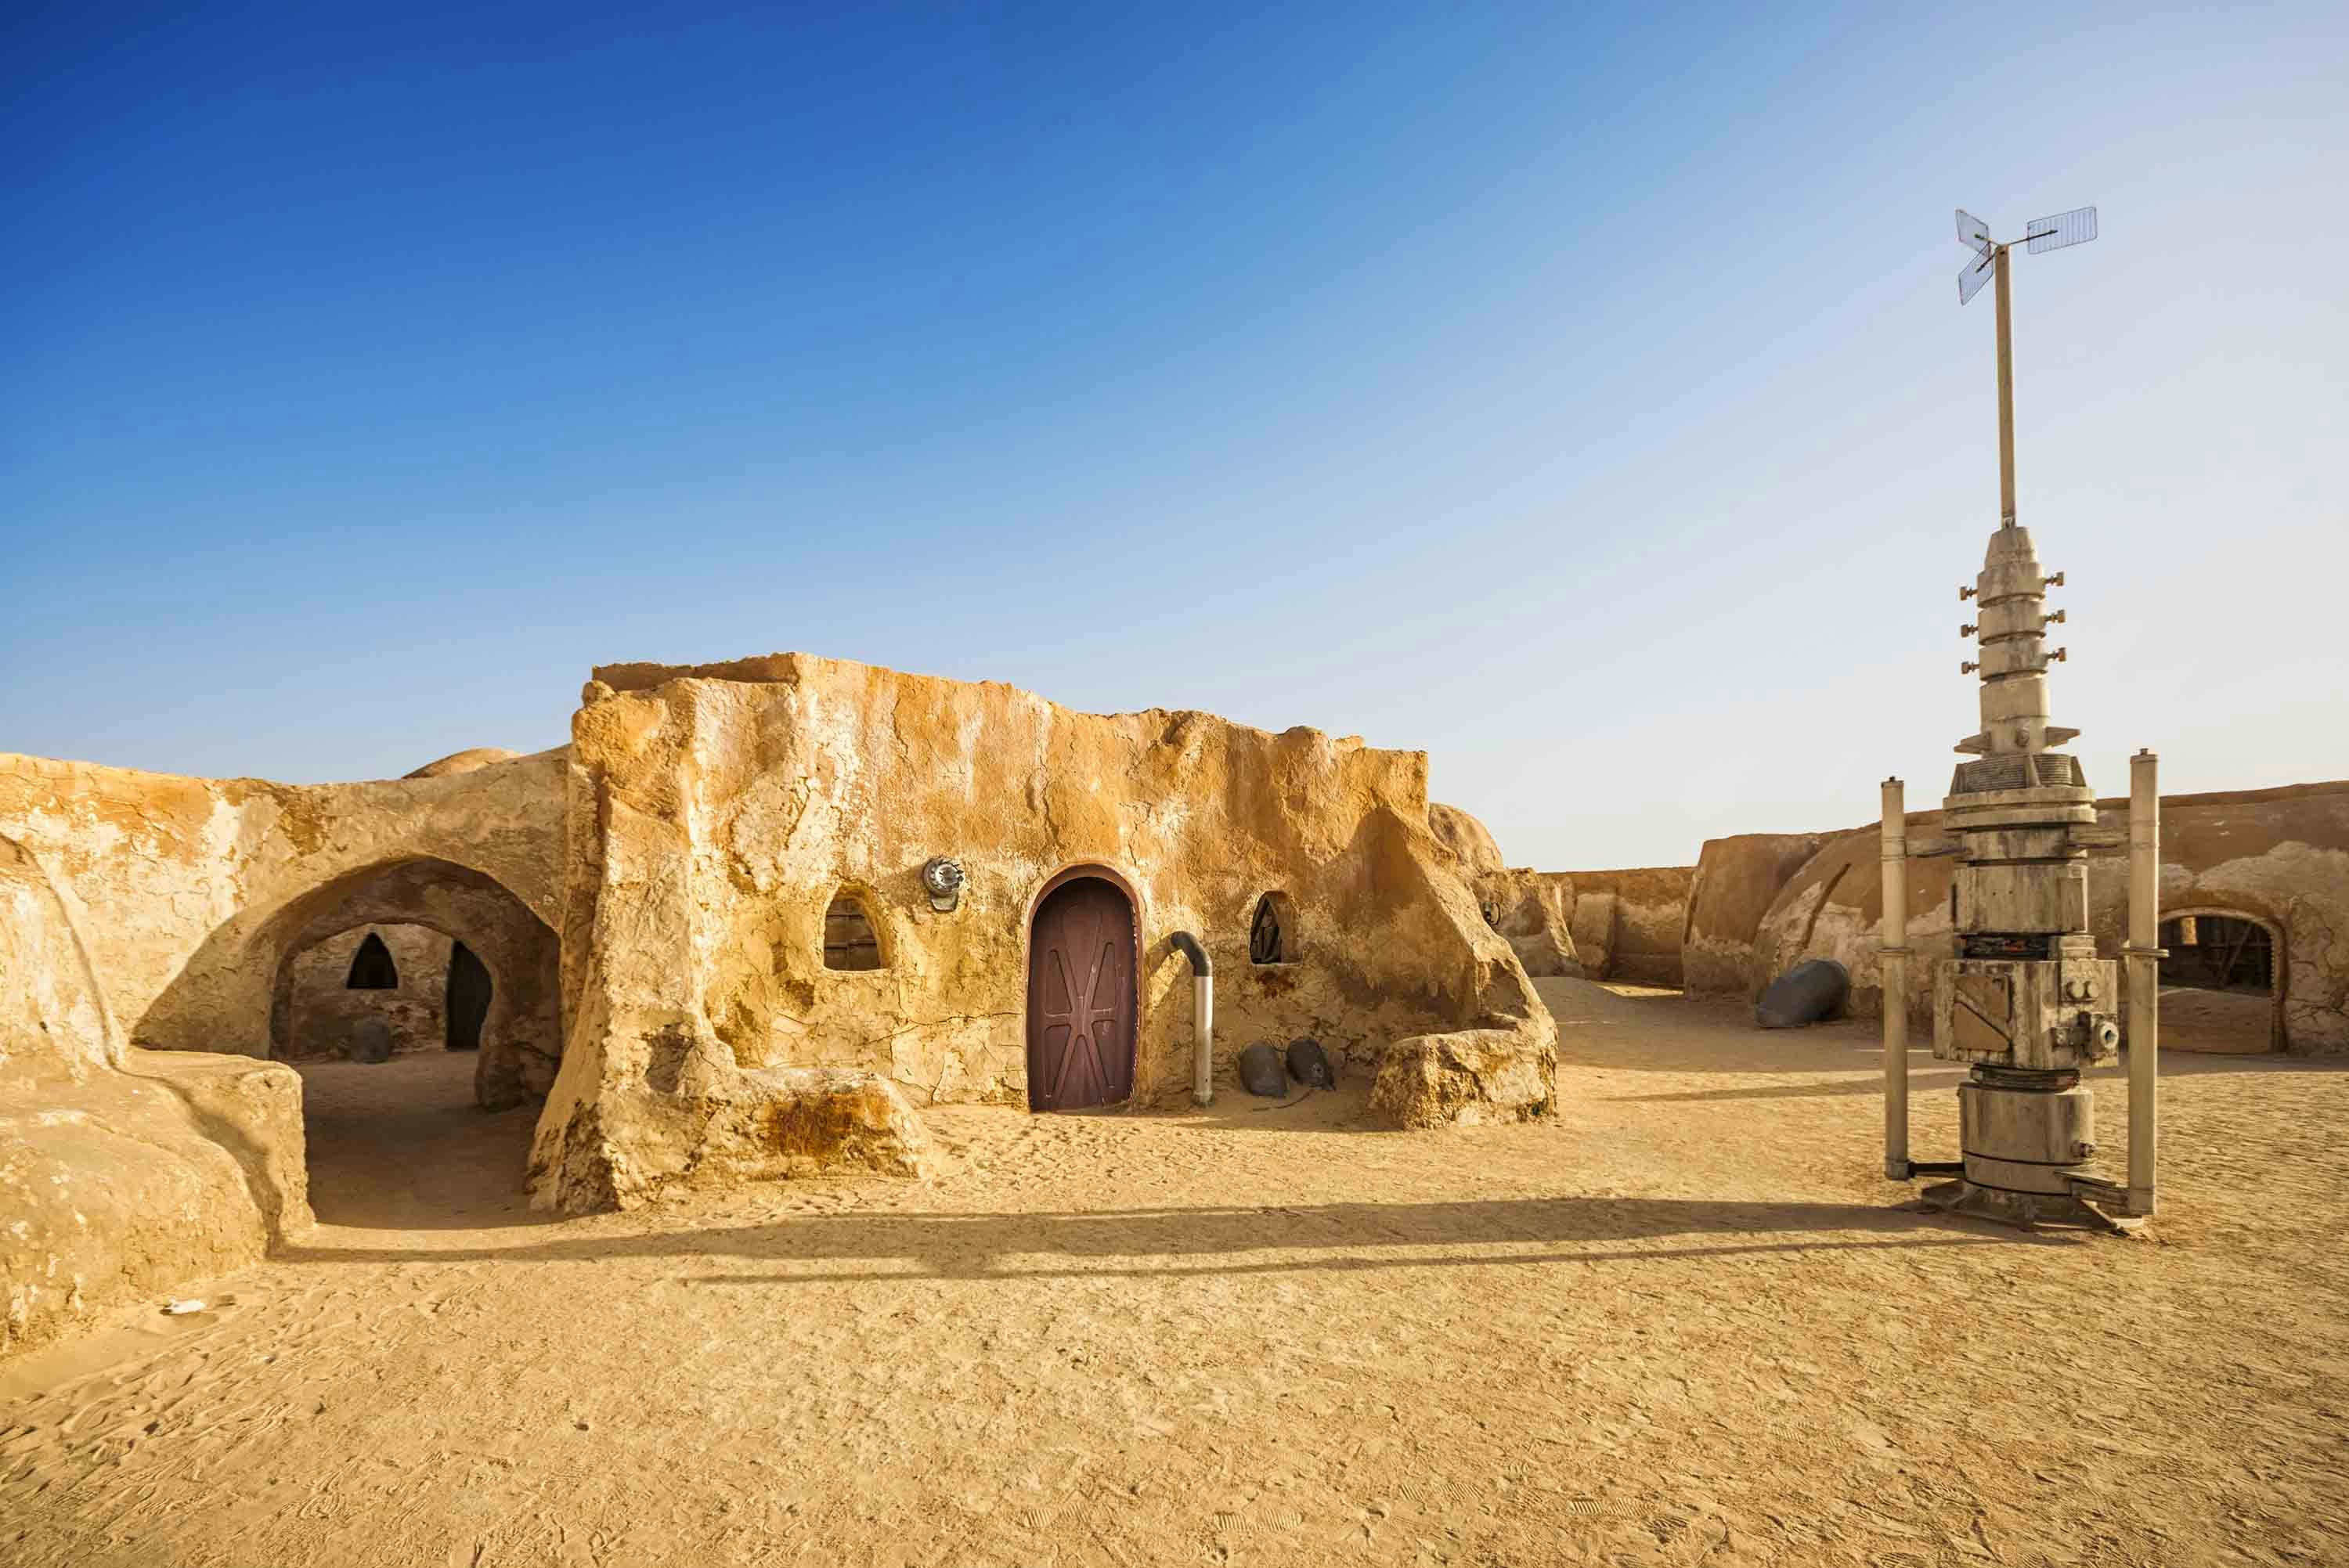 Abandoned Star Wars set in the Sahara desert, Tunisia